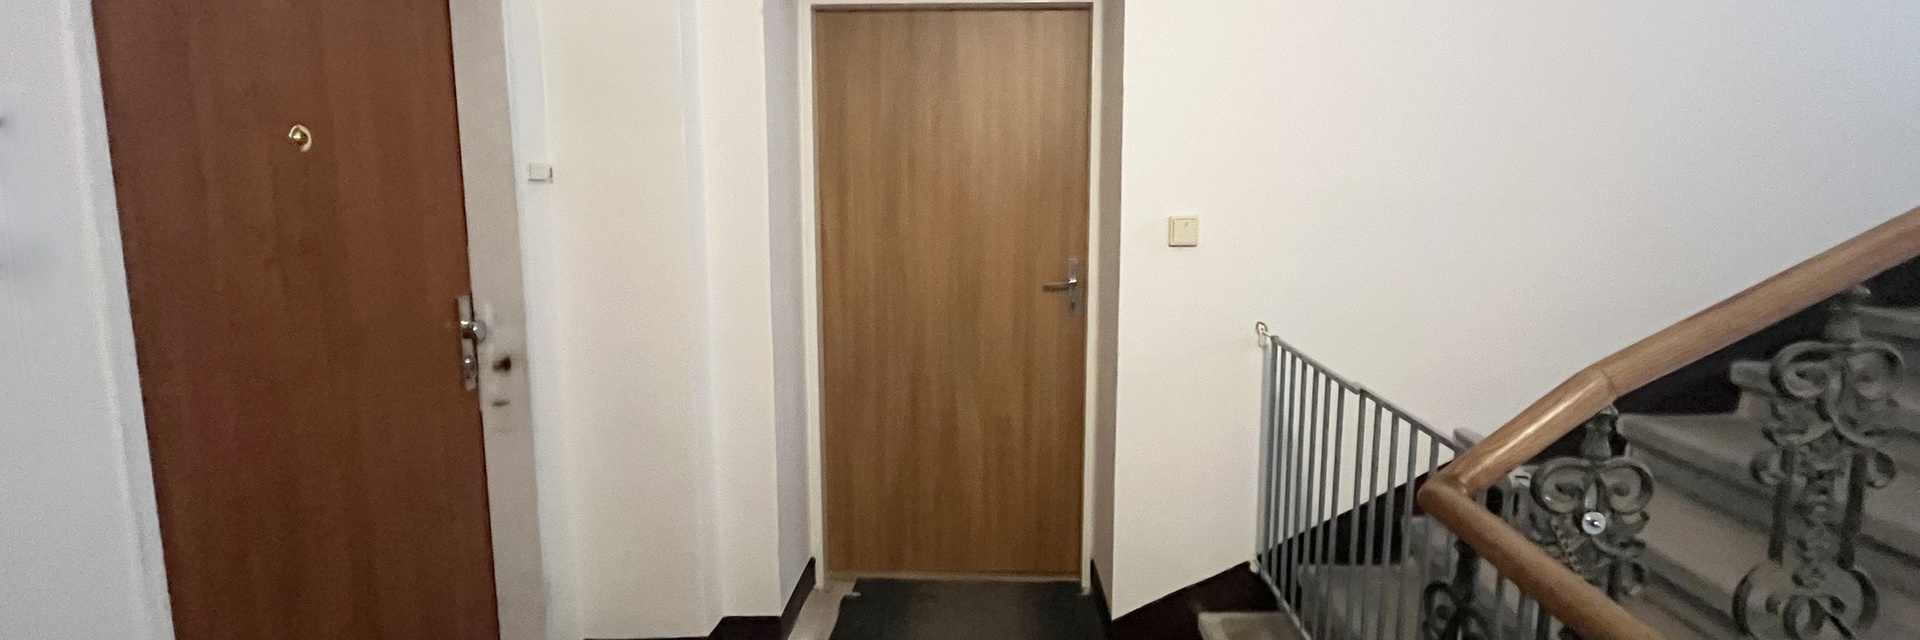 Pronájem prostoru pro Ordinaci, 68 m² - Brno - Královo Pole